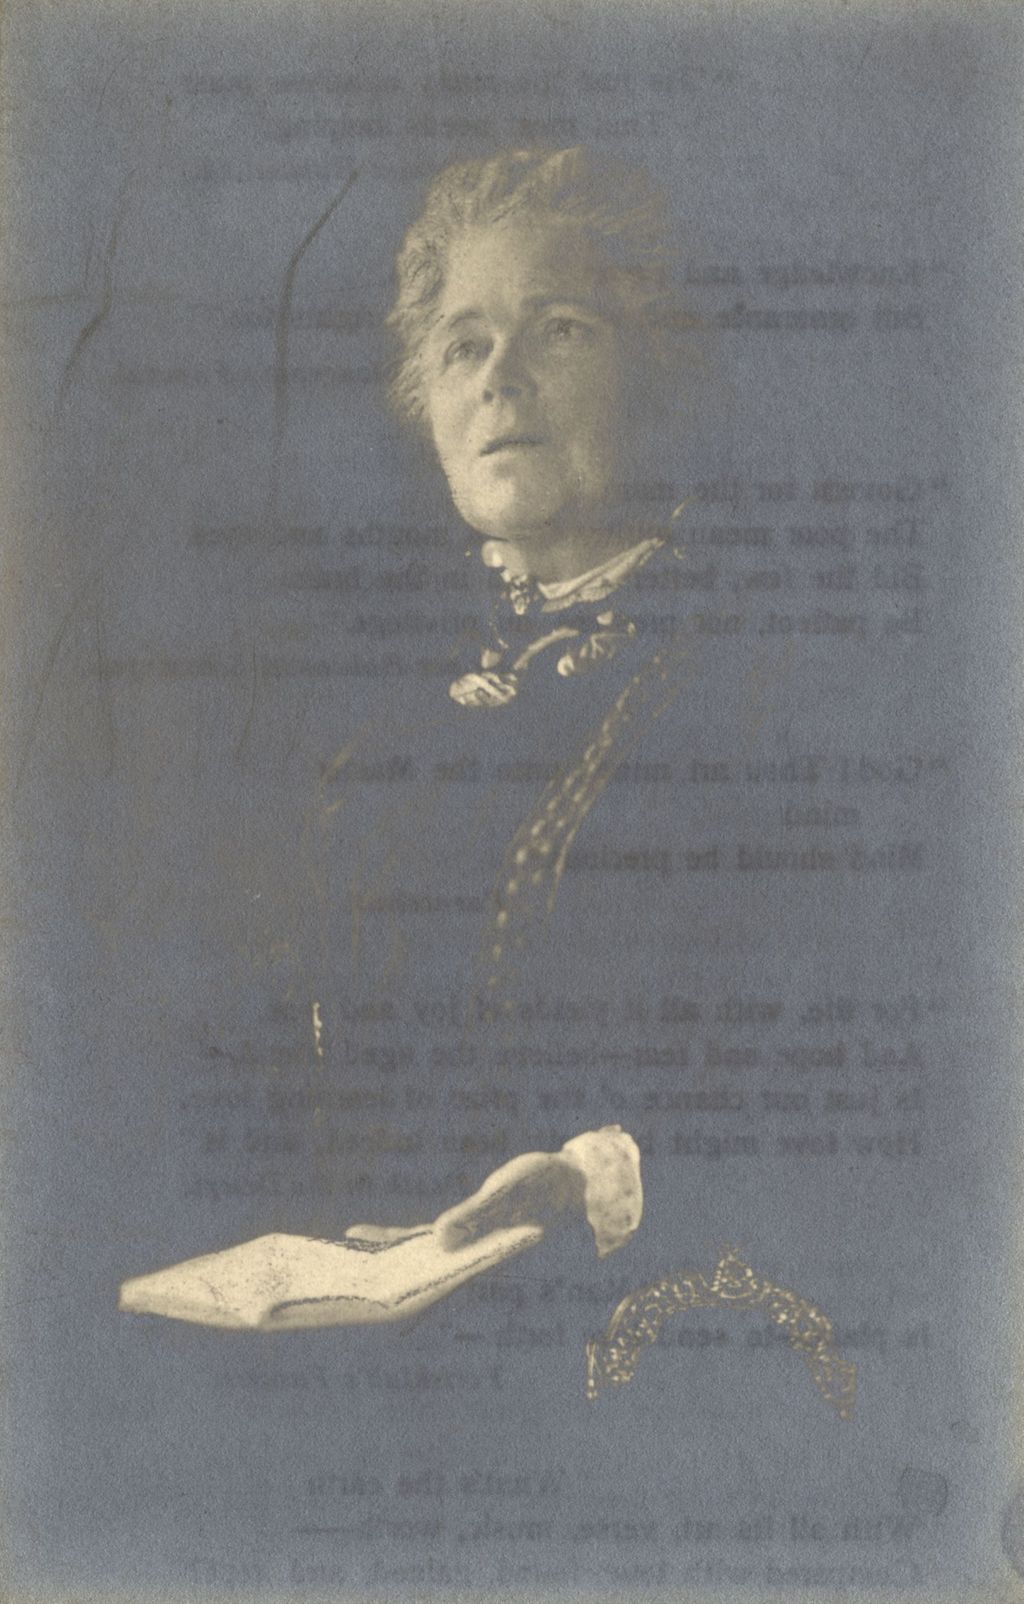 Photo portrait of Henrietta Barnett, co-founder of Toynbee Hall in London